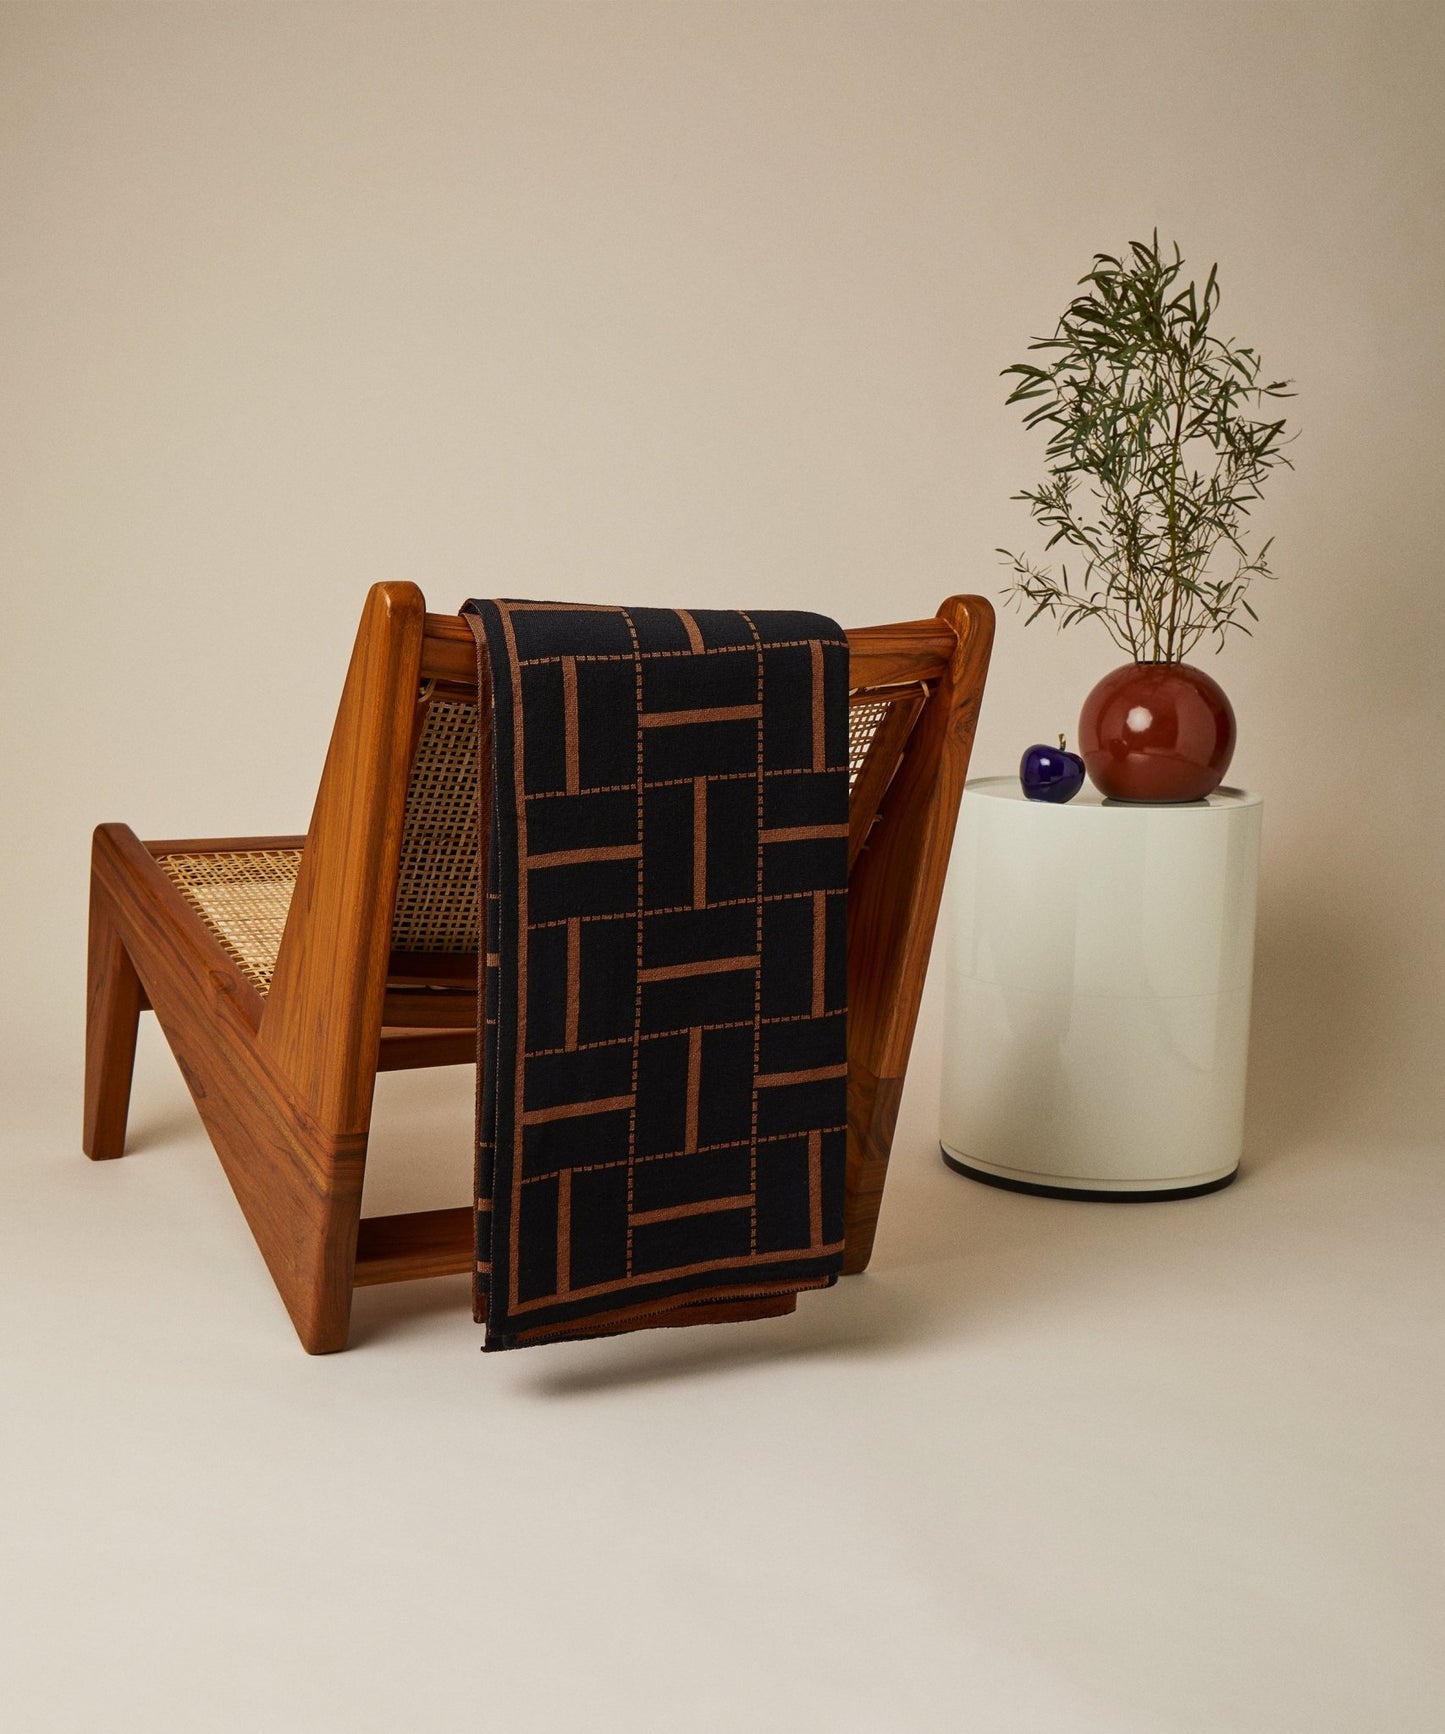 Biombo Merino Wool Blanket- Cocoa - Ambar Homeware throw  - knitted throw - French chair